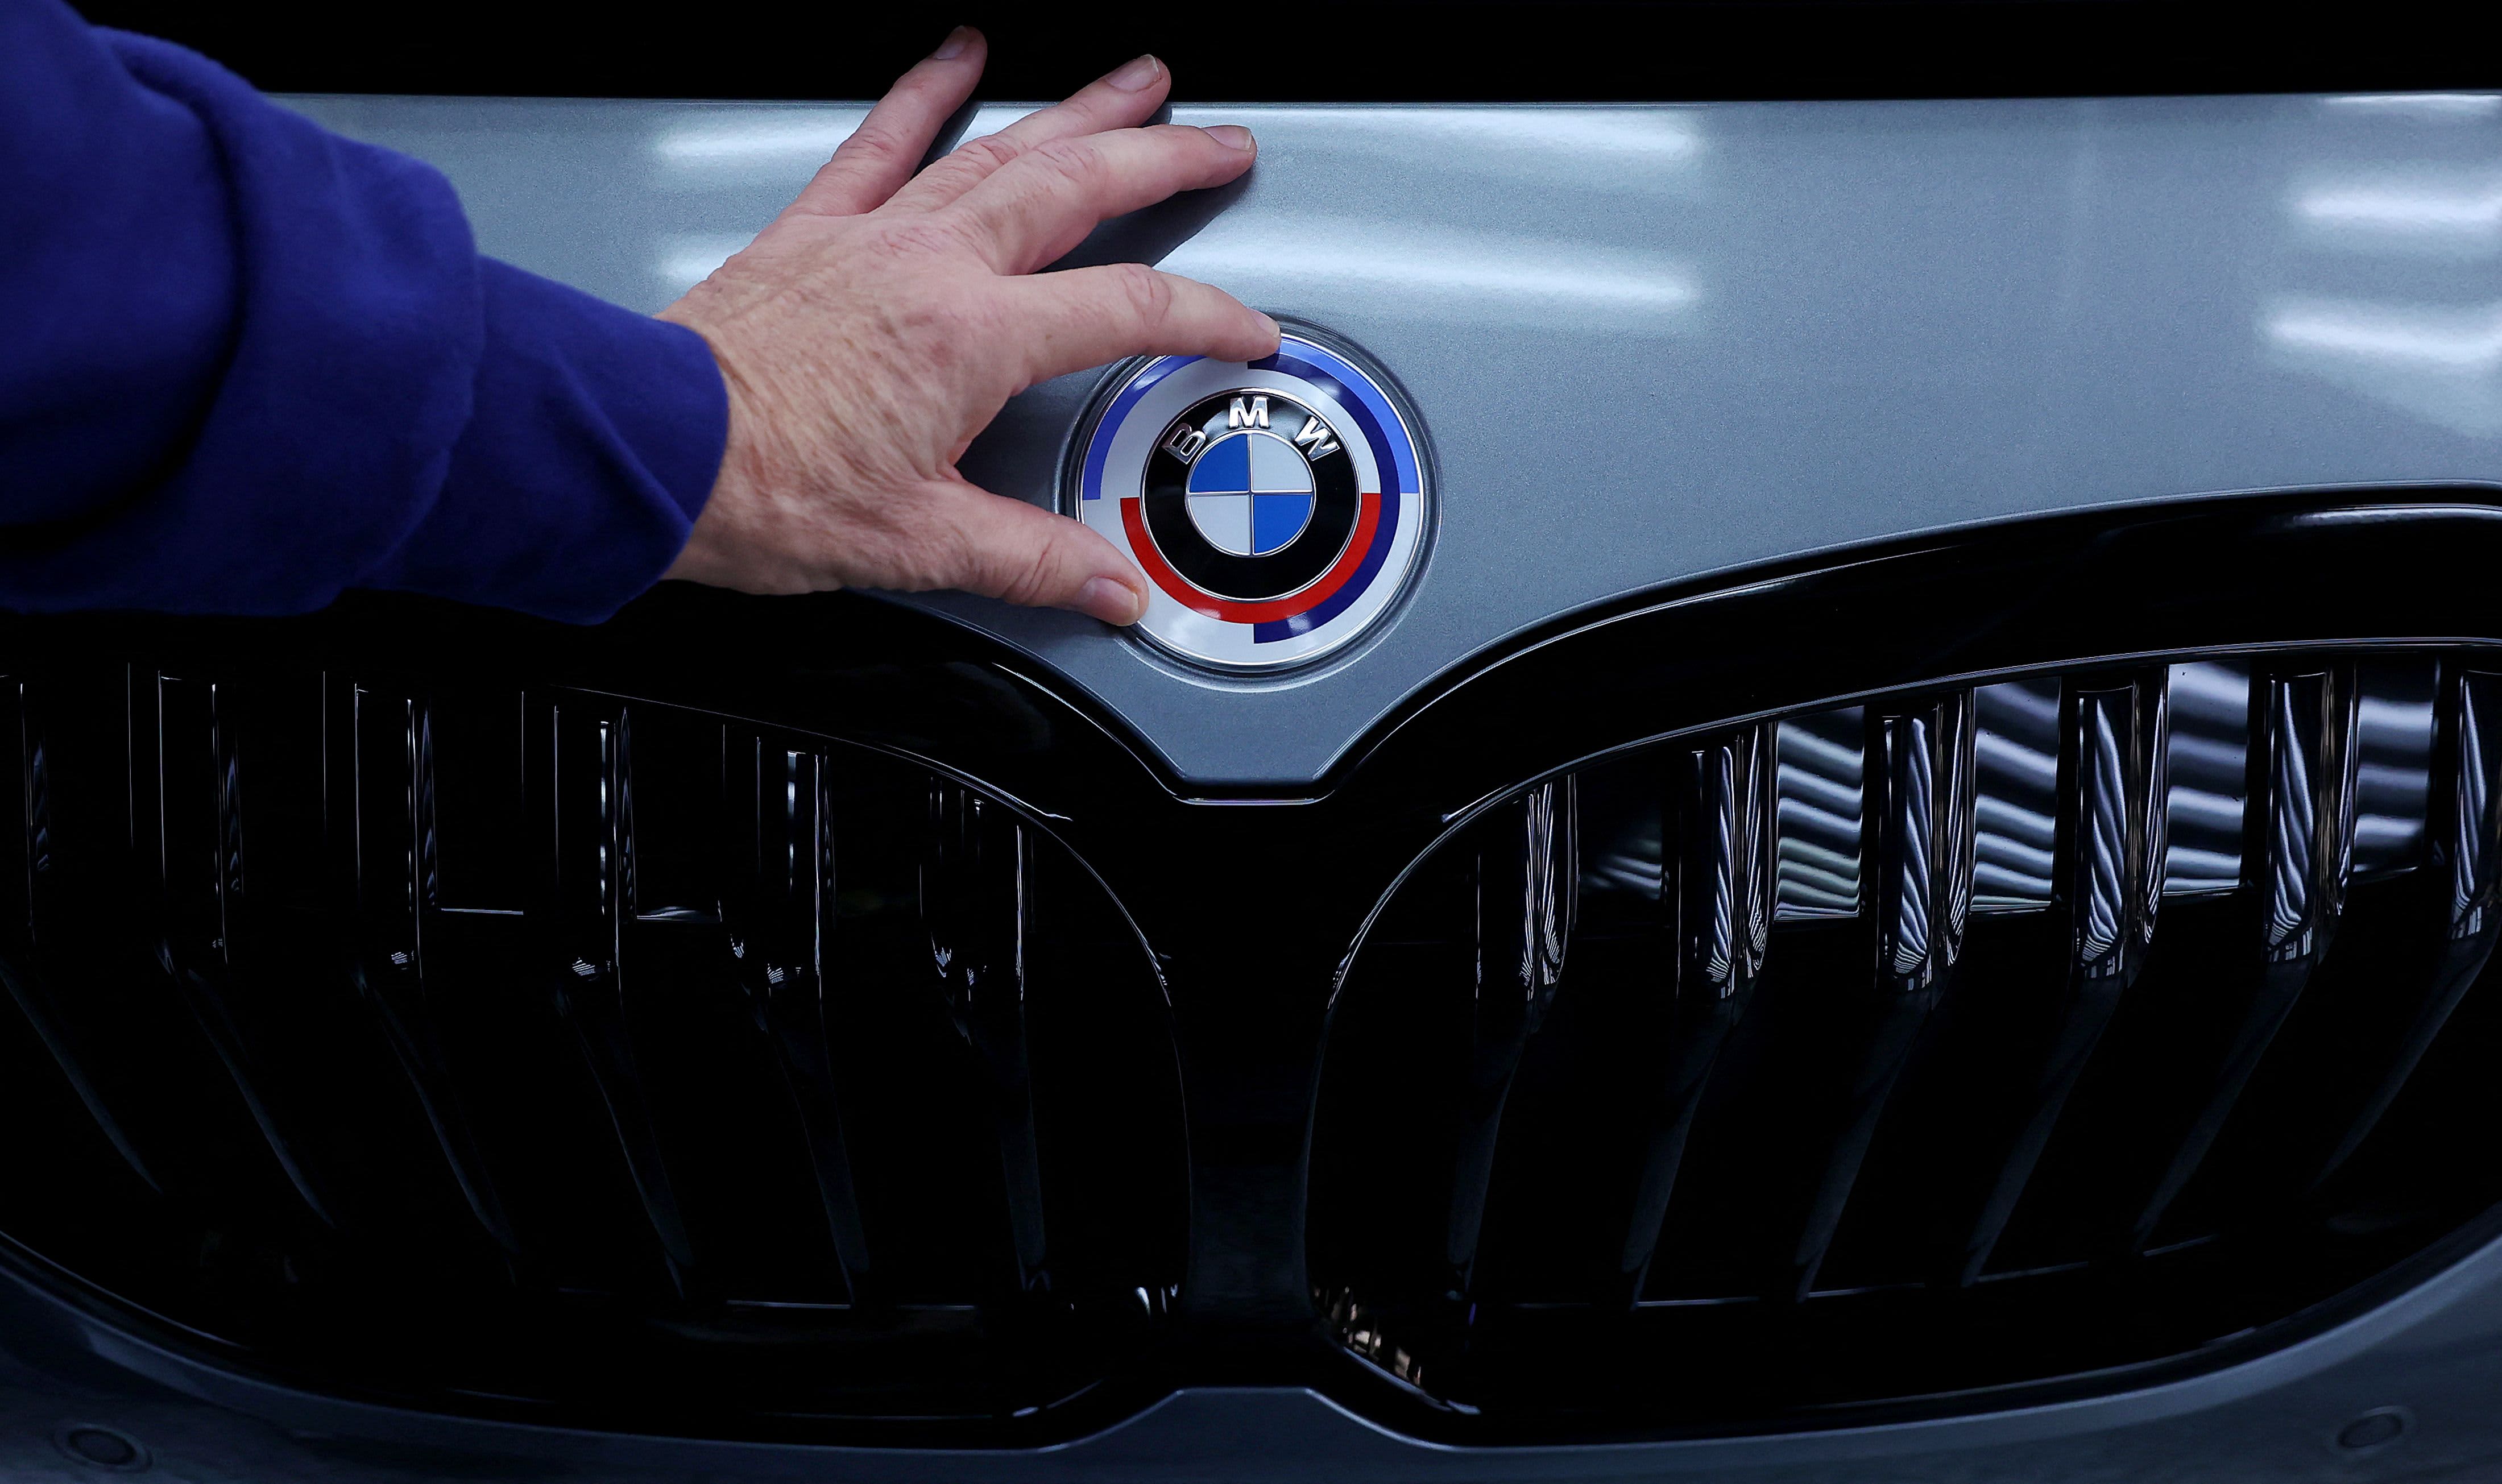 La casa automobilistica tedesca BMW presenta una nuova auto elettrica